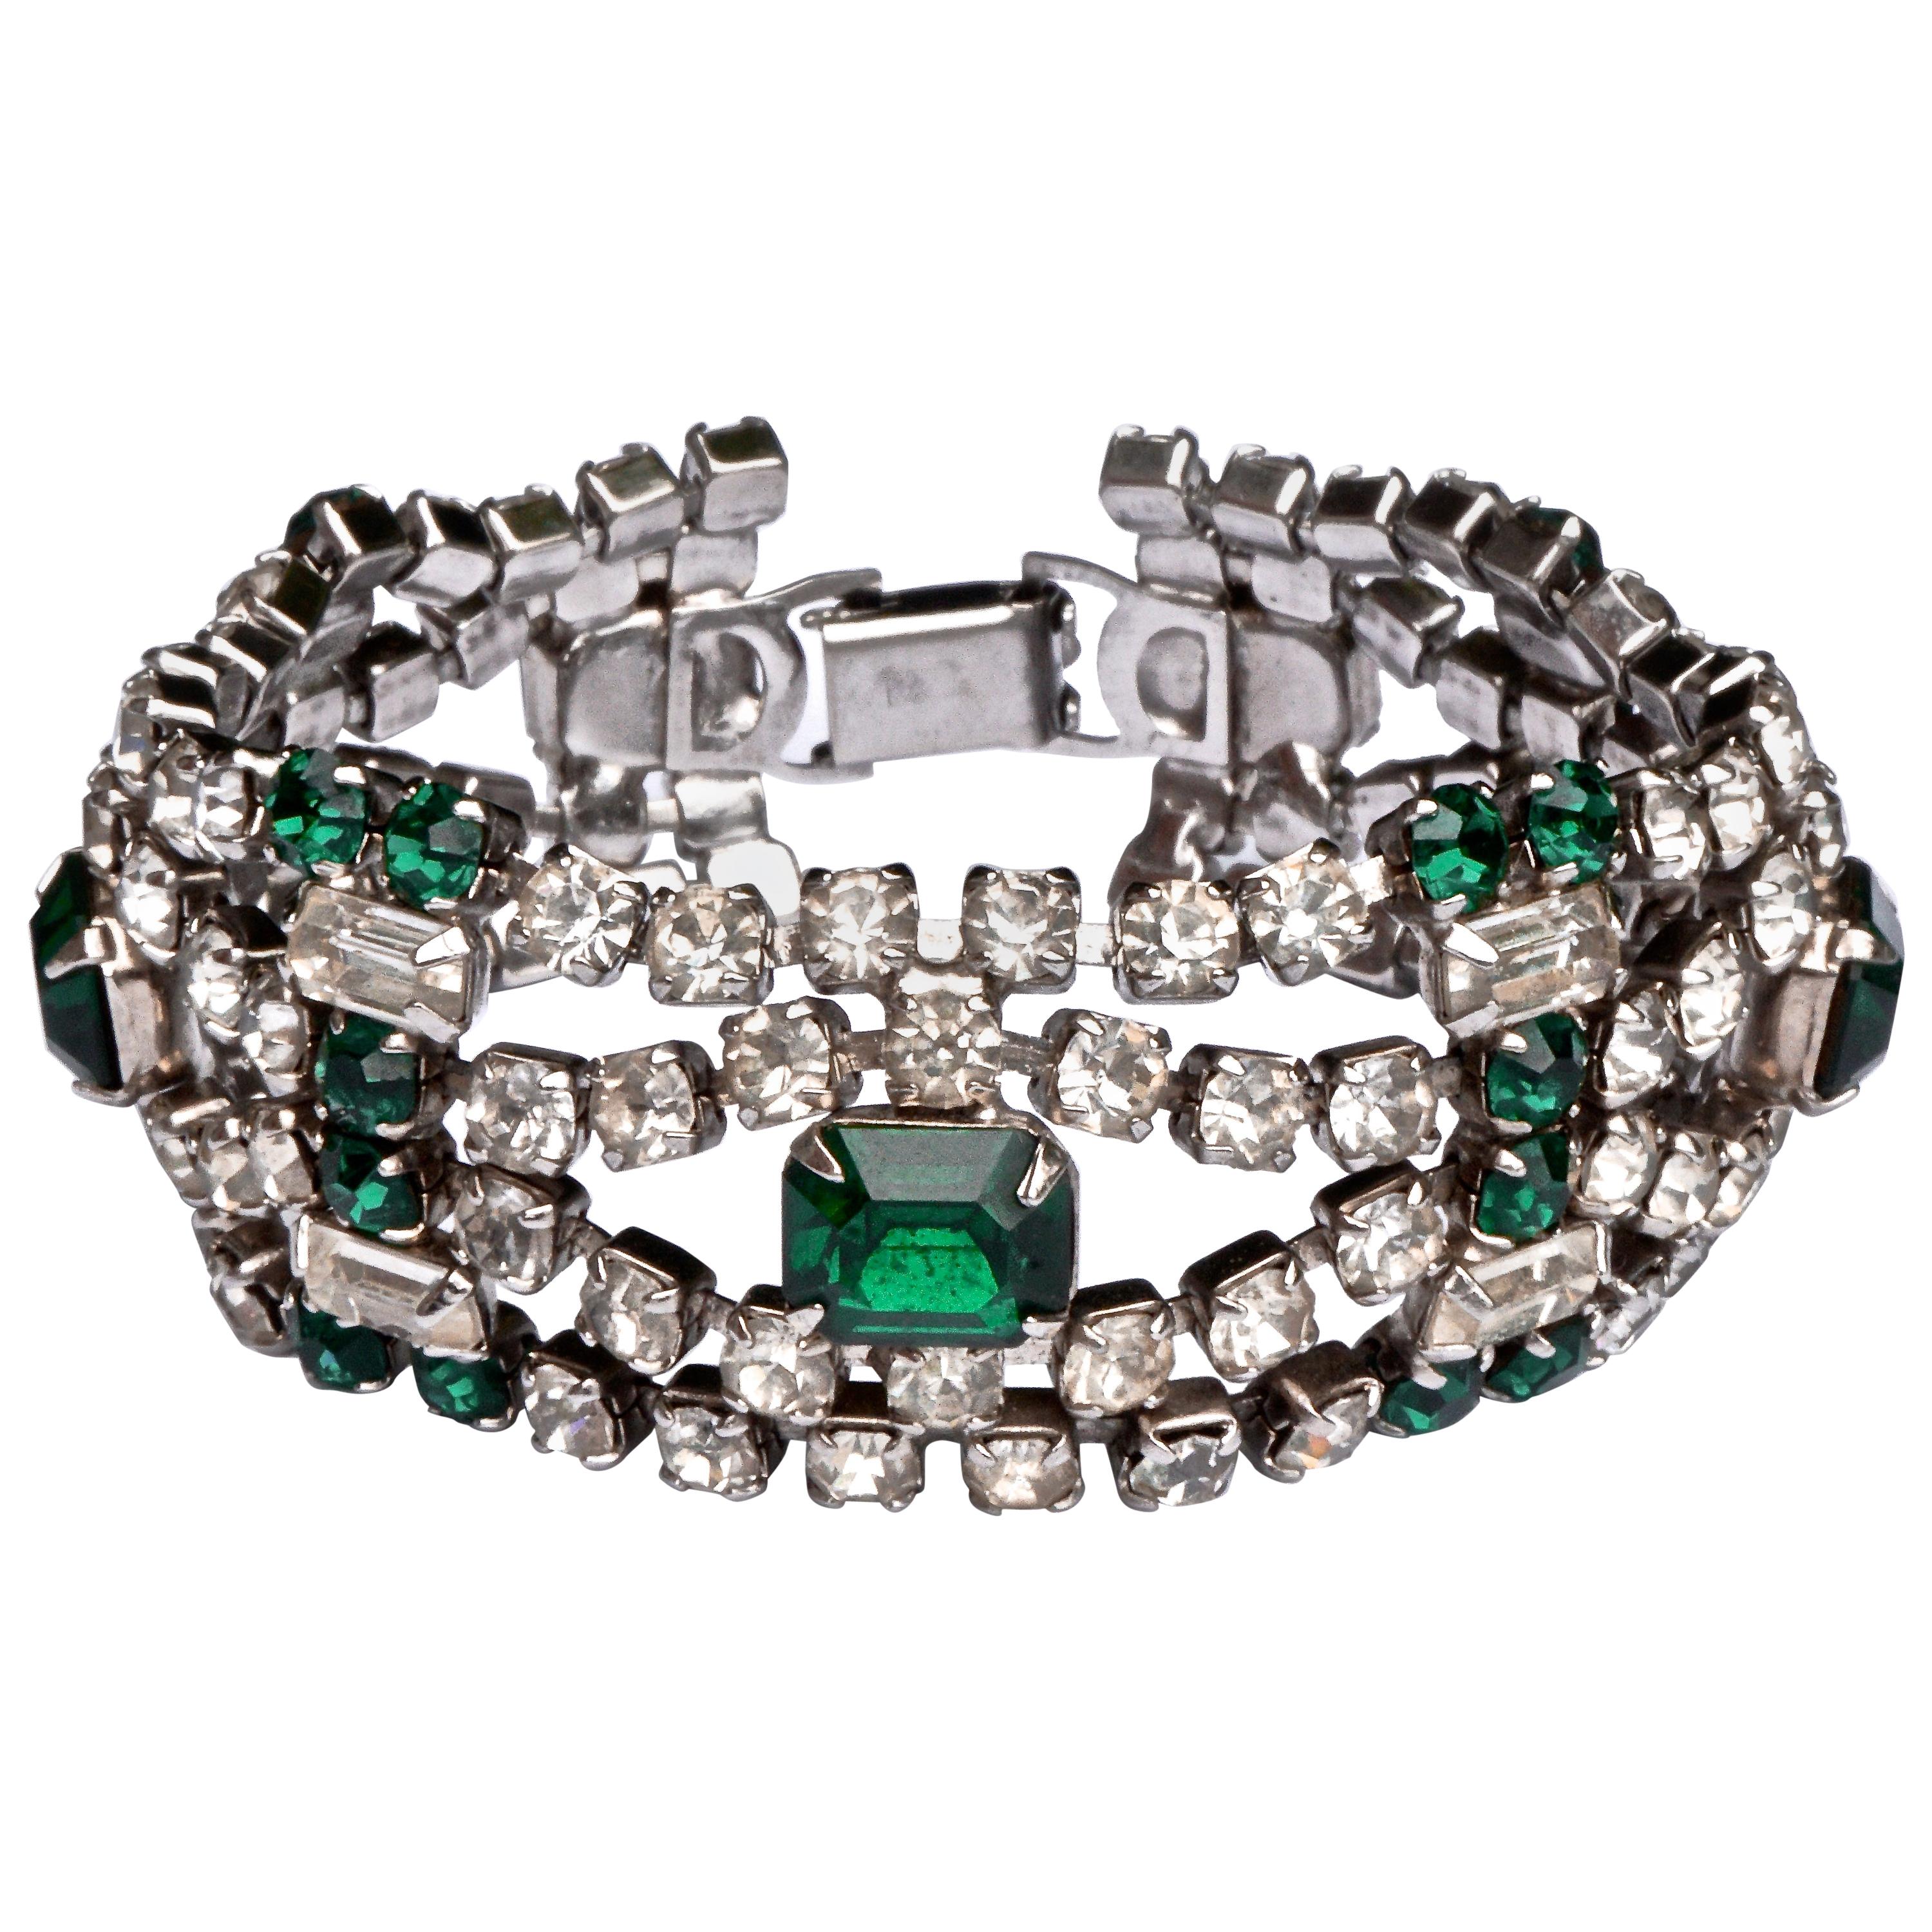 1950s Silver Tone Emerald Green and Clear Rhinestones Bracelet